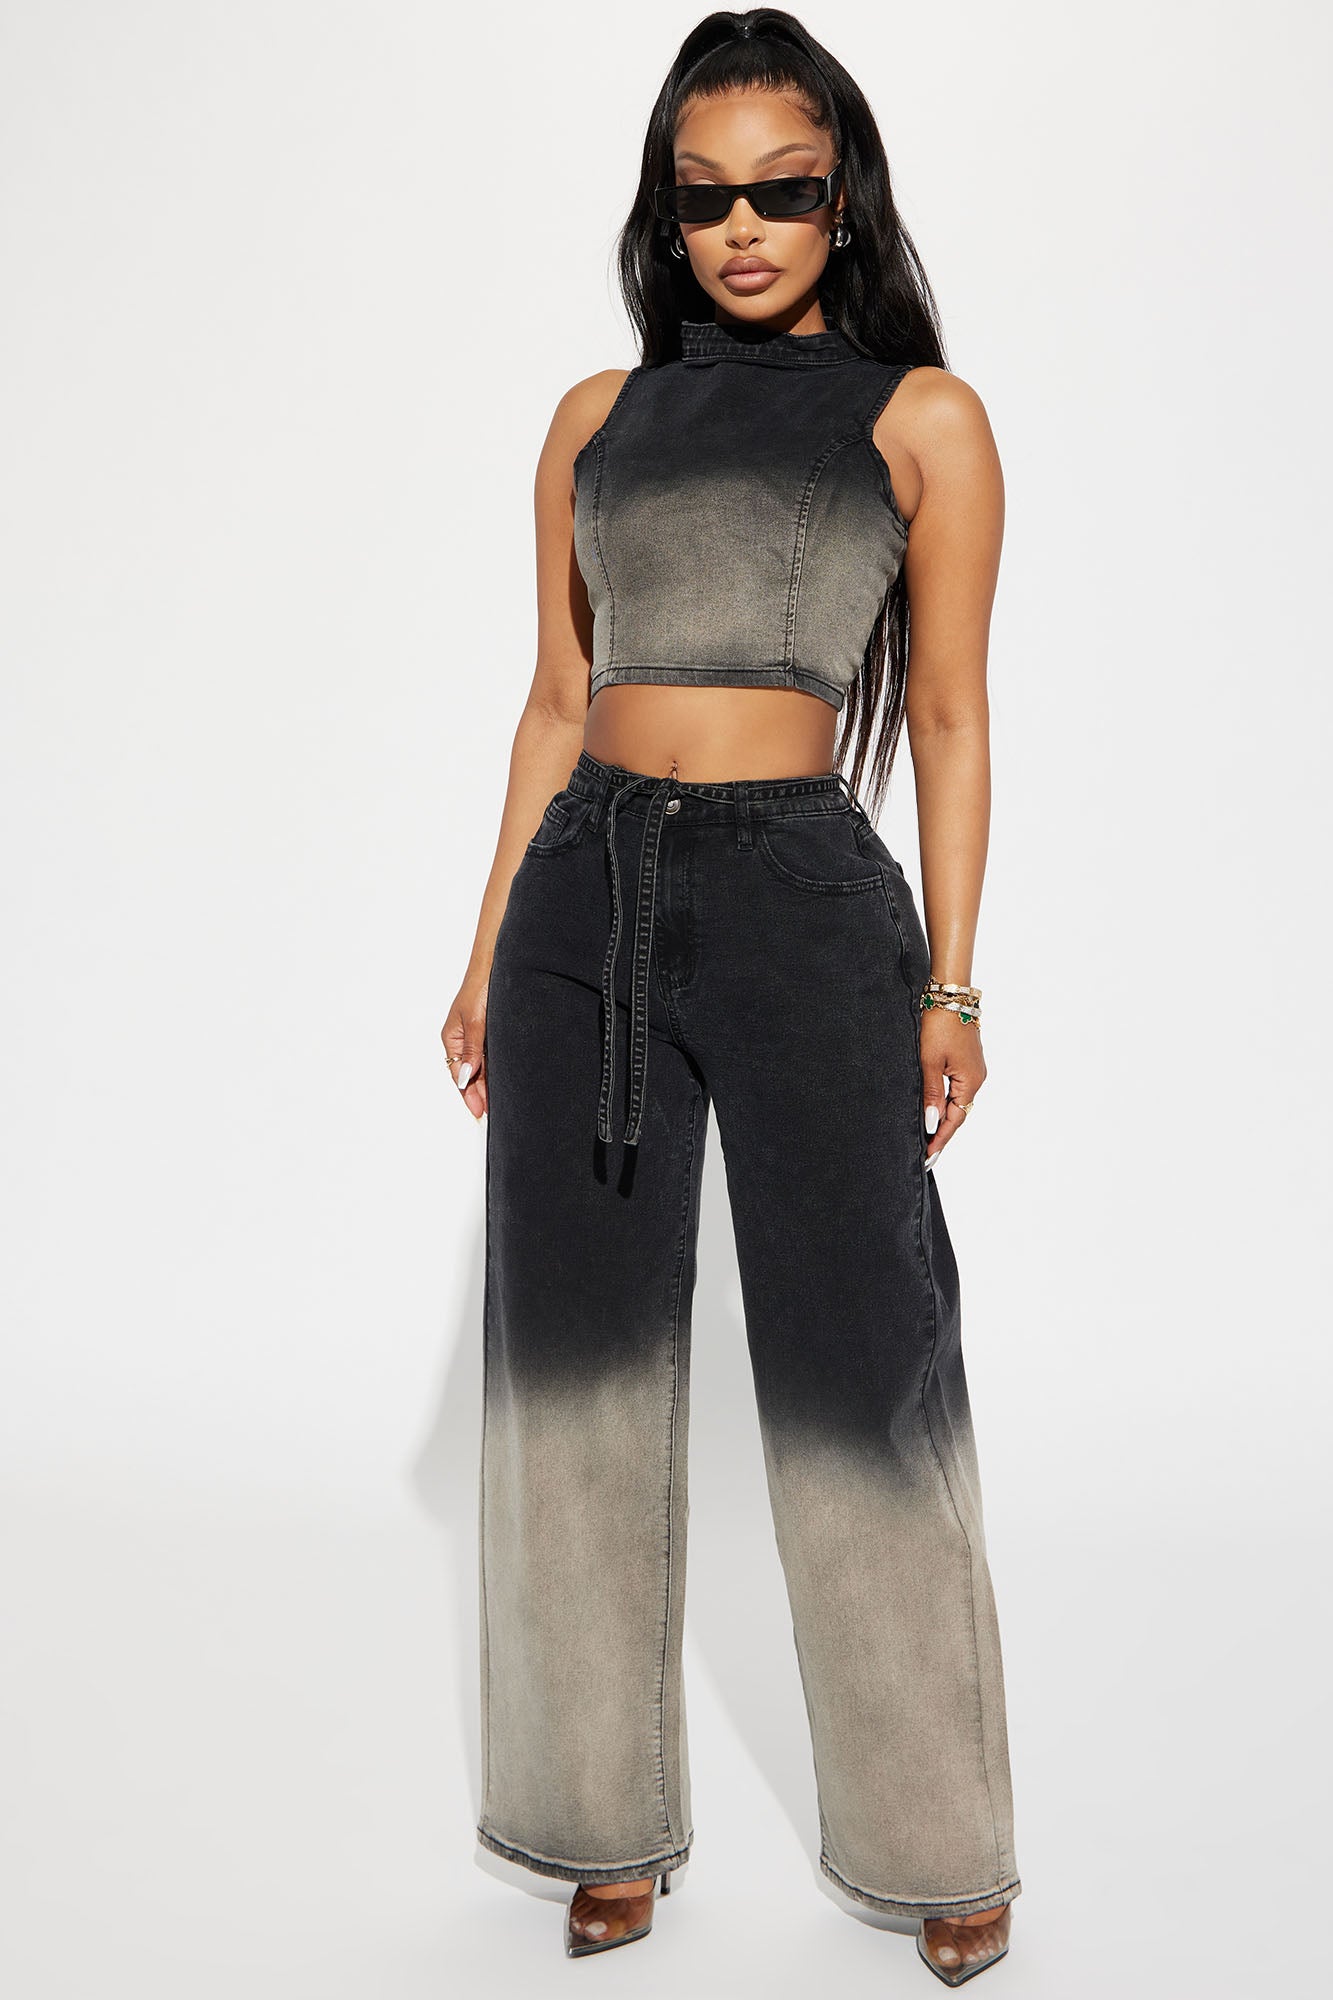 Exclusive Invitation Rhinestone Pant Set - Black, Fashion Nova, Matching  Sets